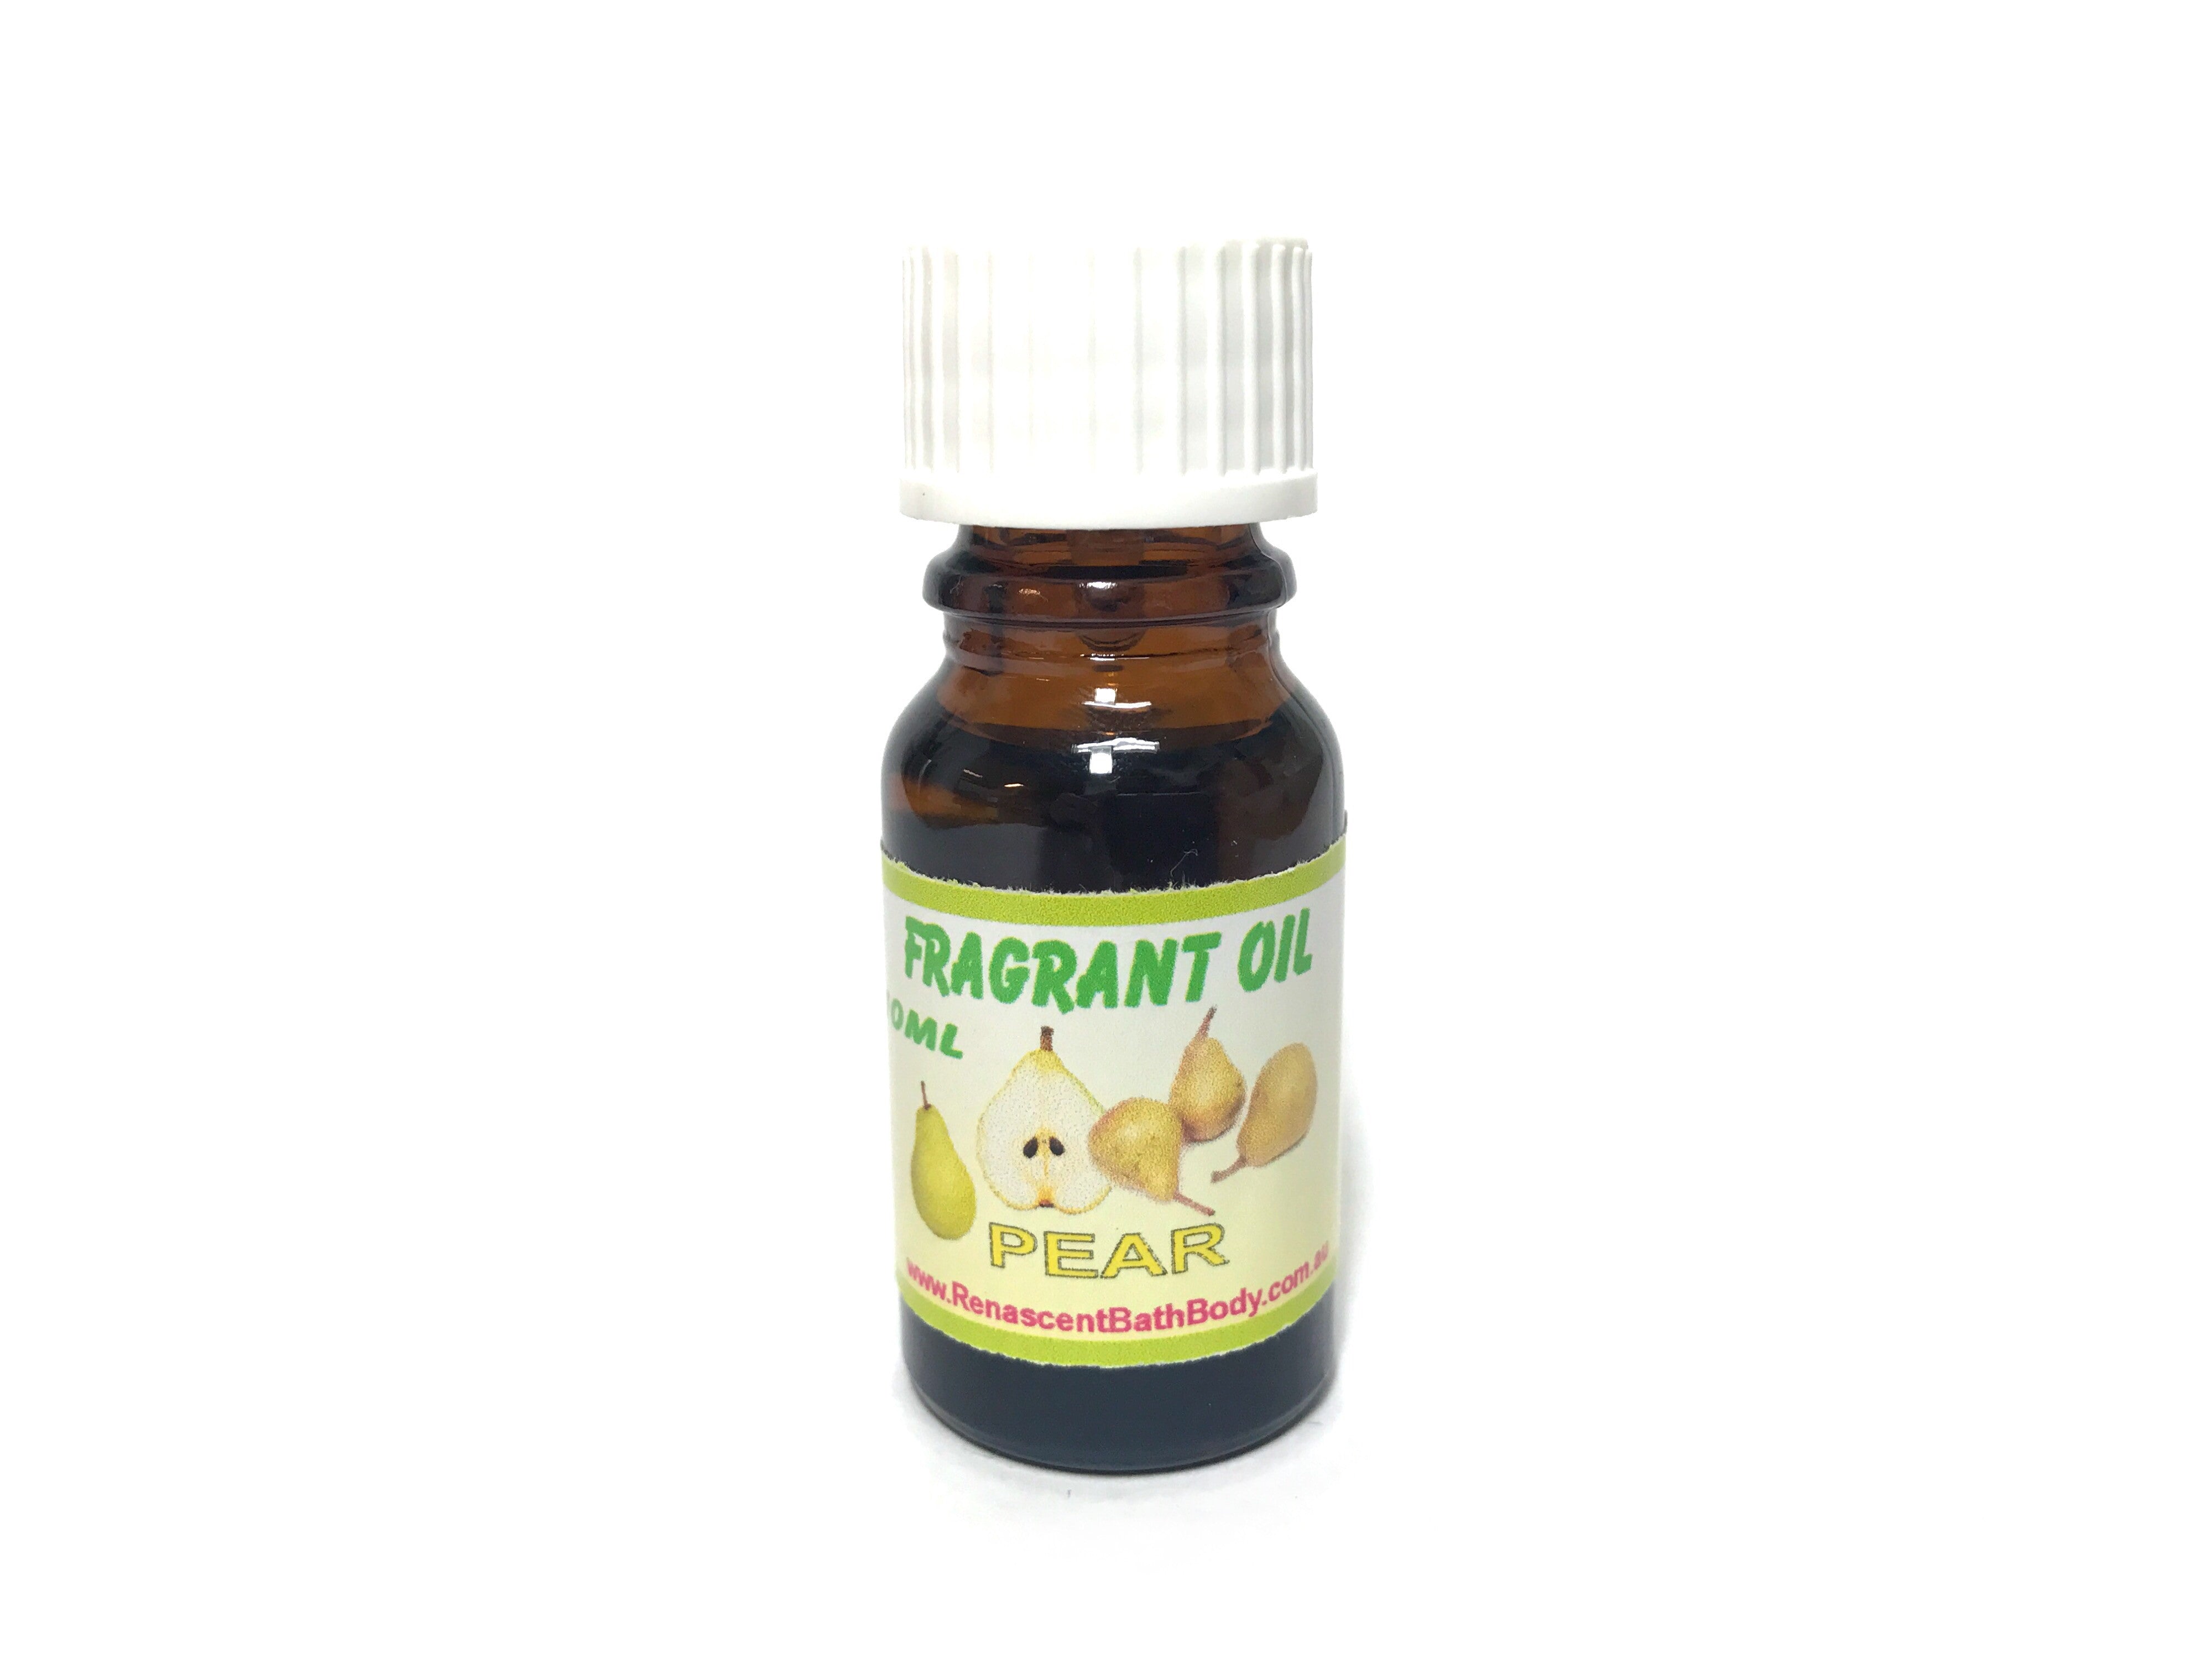 Pear Fragrant Oil